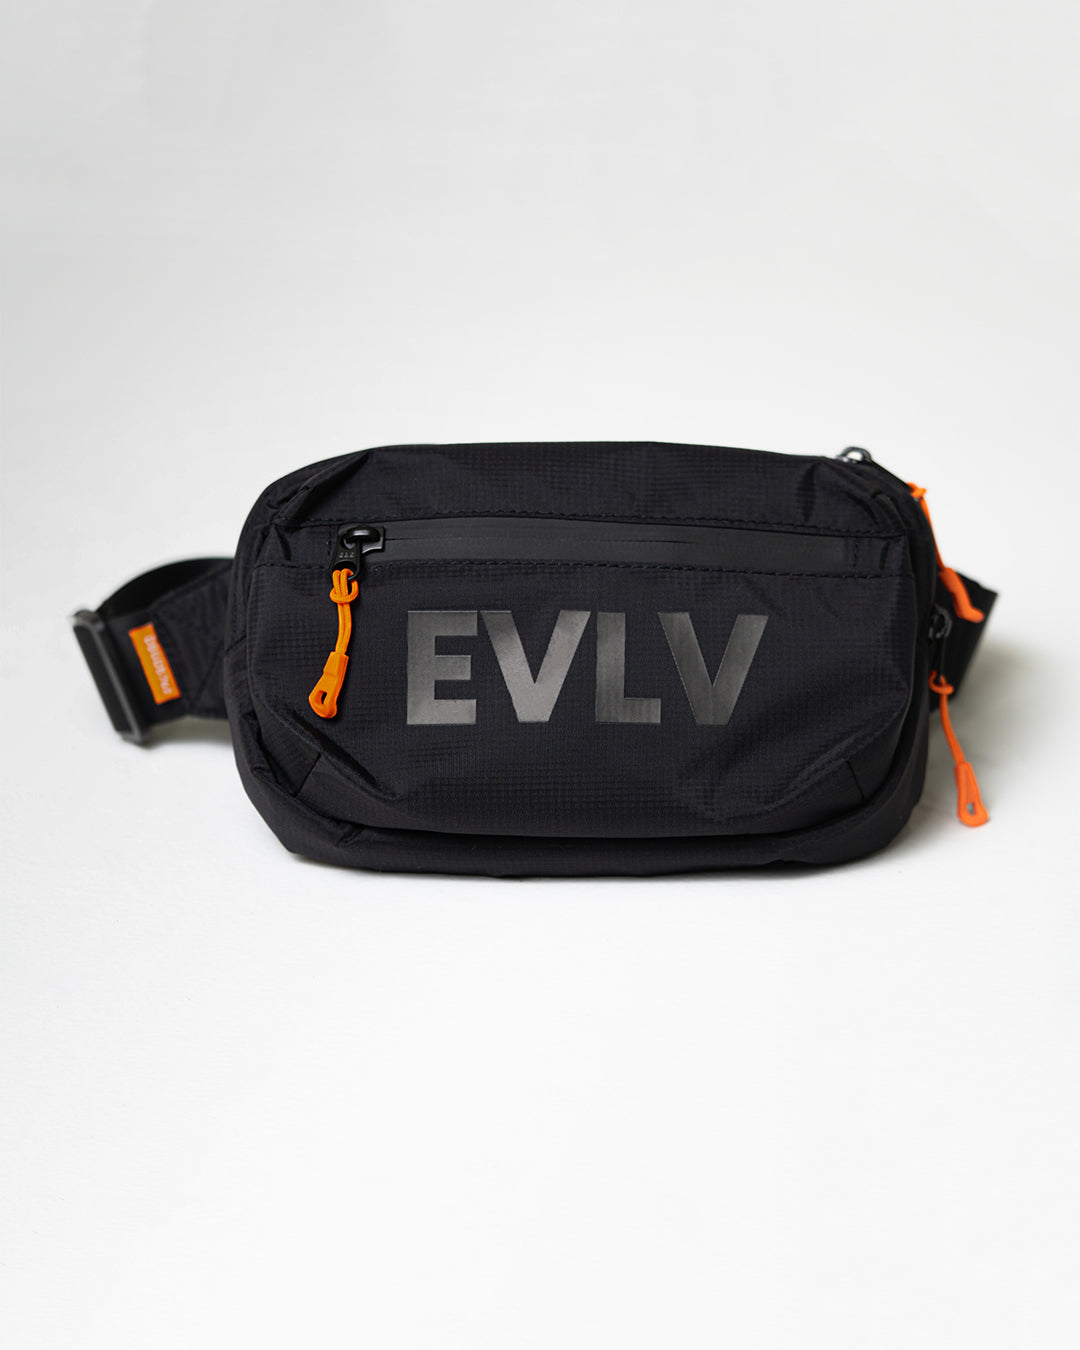 EVLV 360 WAIST BAG - BLACK